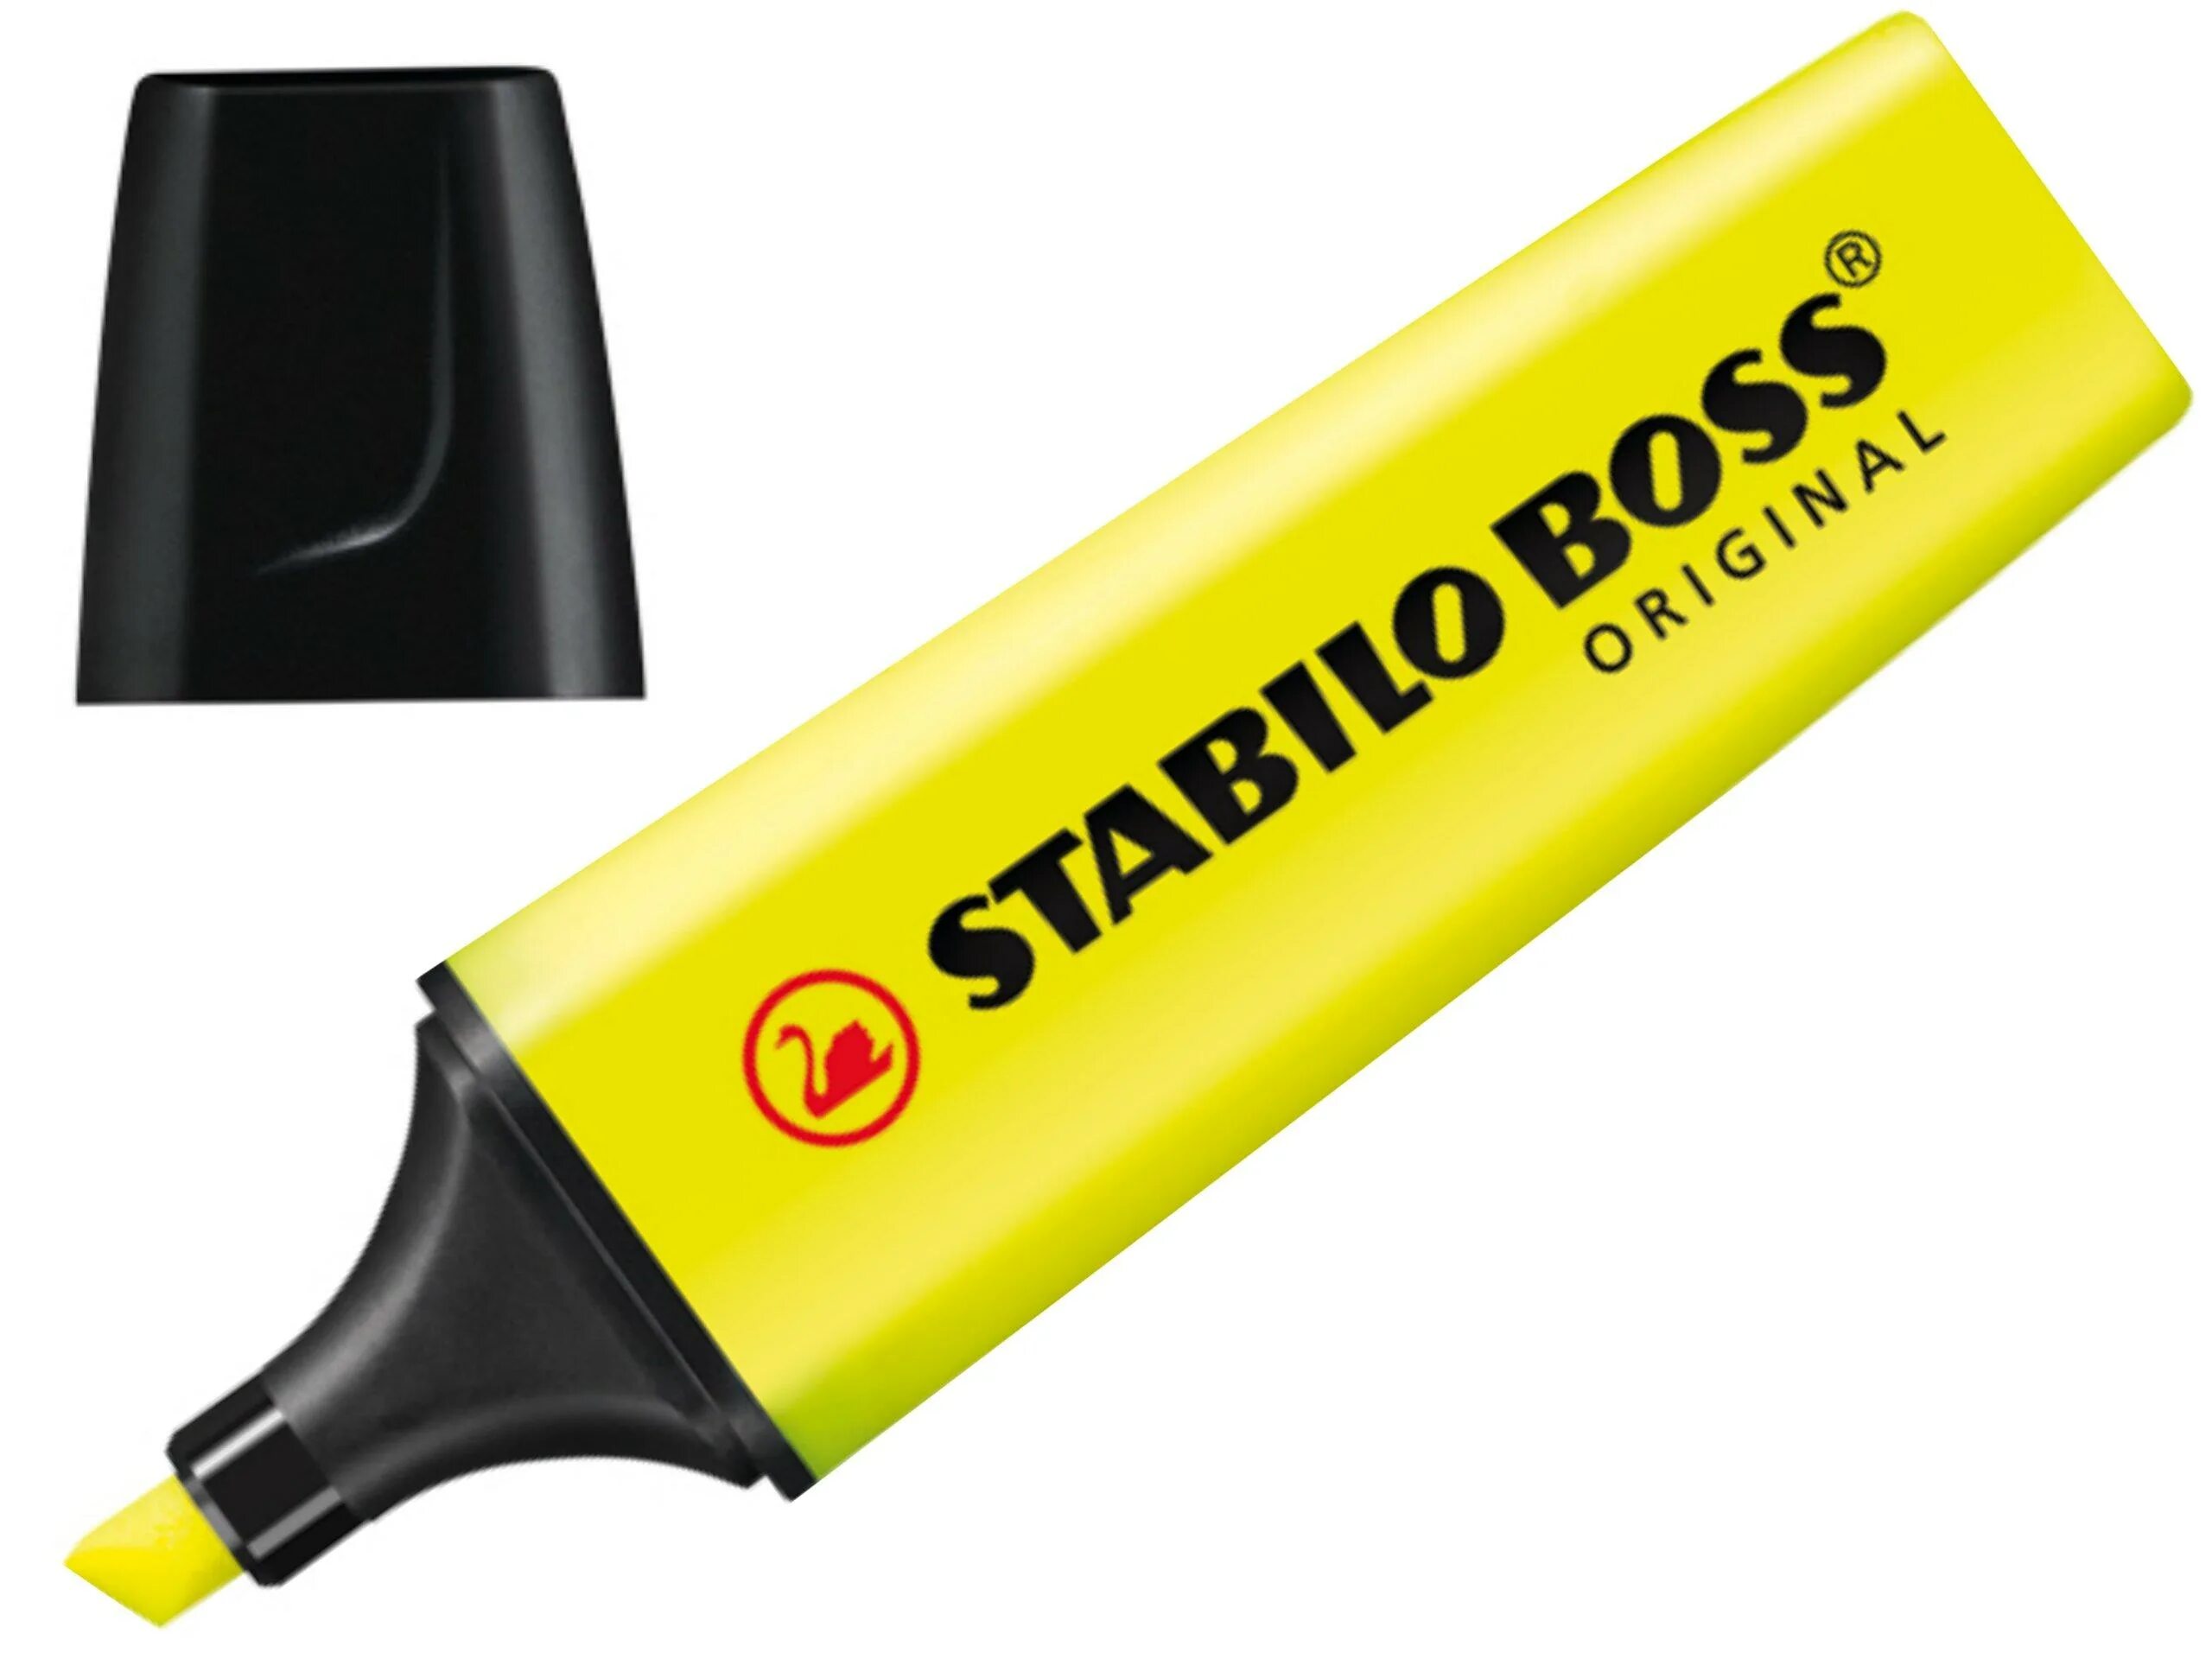 Маркер желтого цвета. Текстмаркер Stabilo Boss. Текстовыделитель Stabilo Boss Original. Желтый маркер Стабило босс. Набор Stabilo Boss текстовыделителей Original 24.